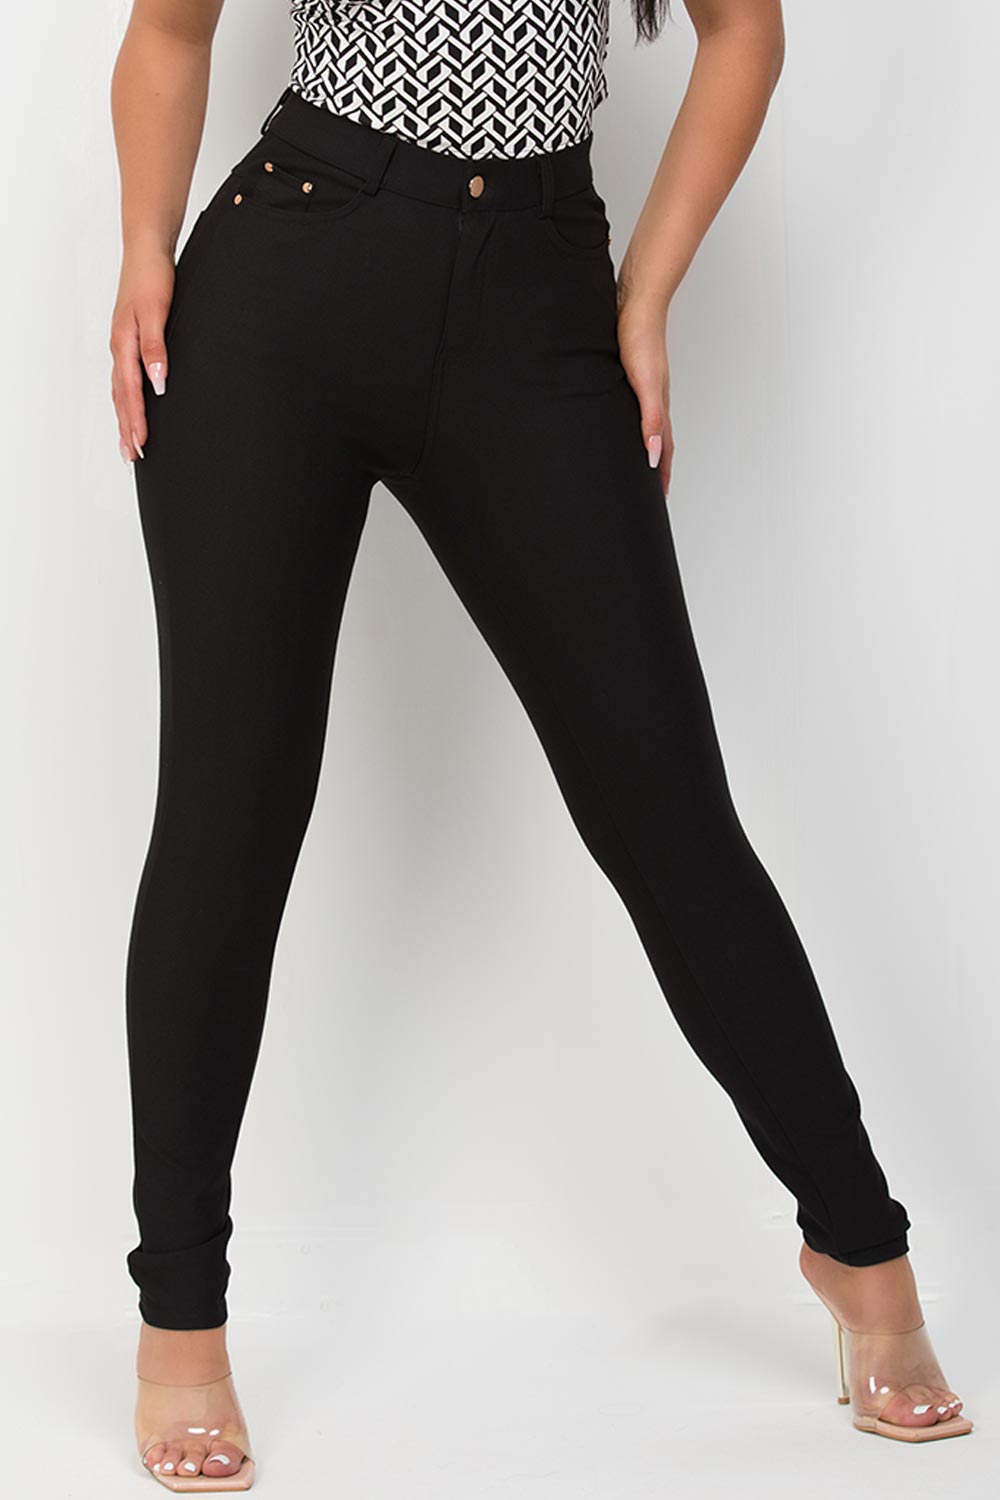 Buy Women Black Regular Fit Solid Casual Trousers Online - 746029 | Allen  Solly